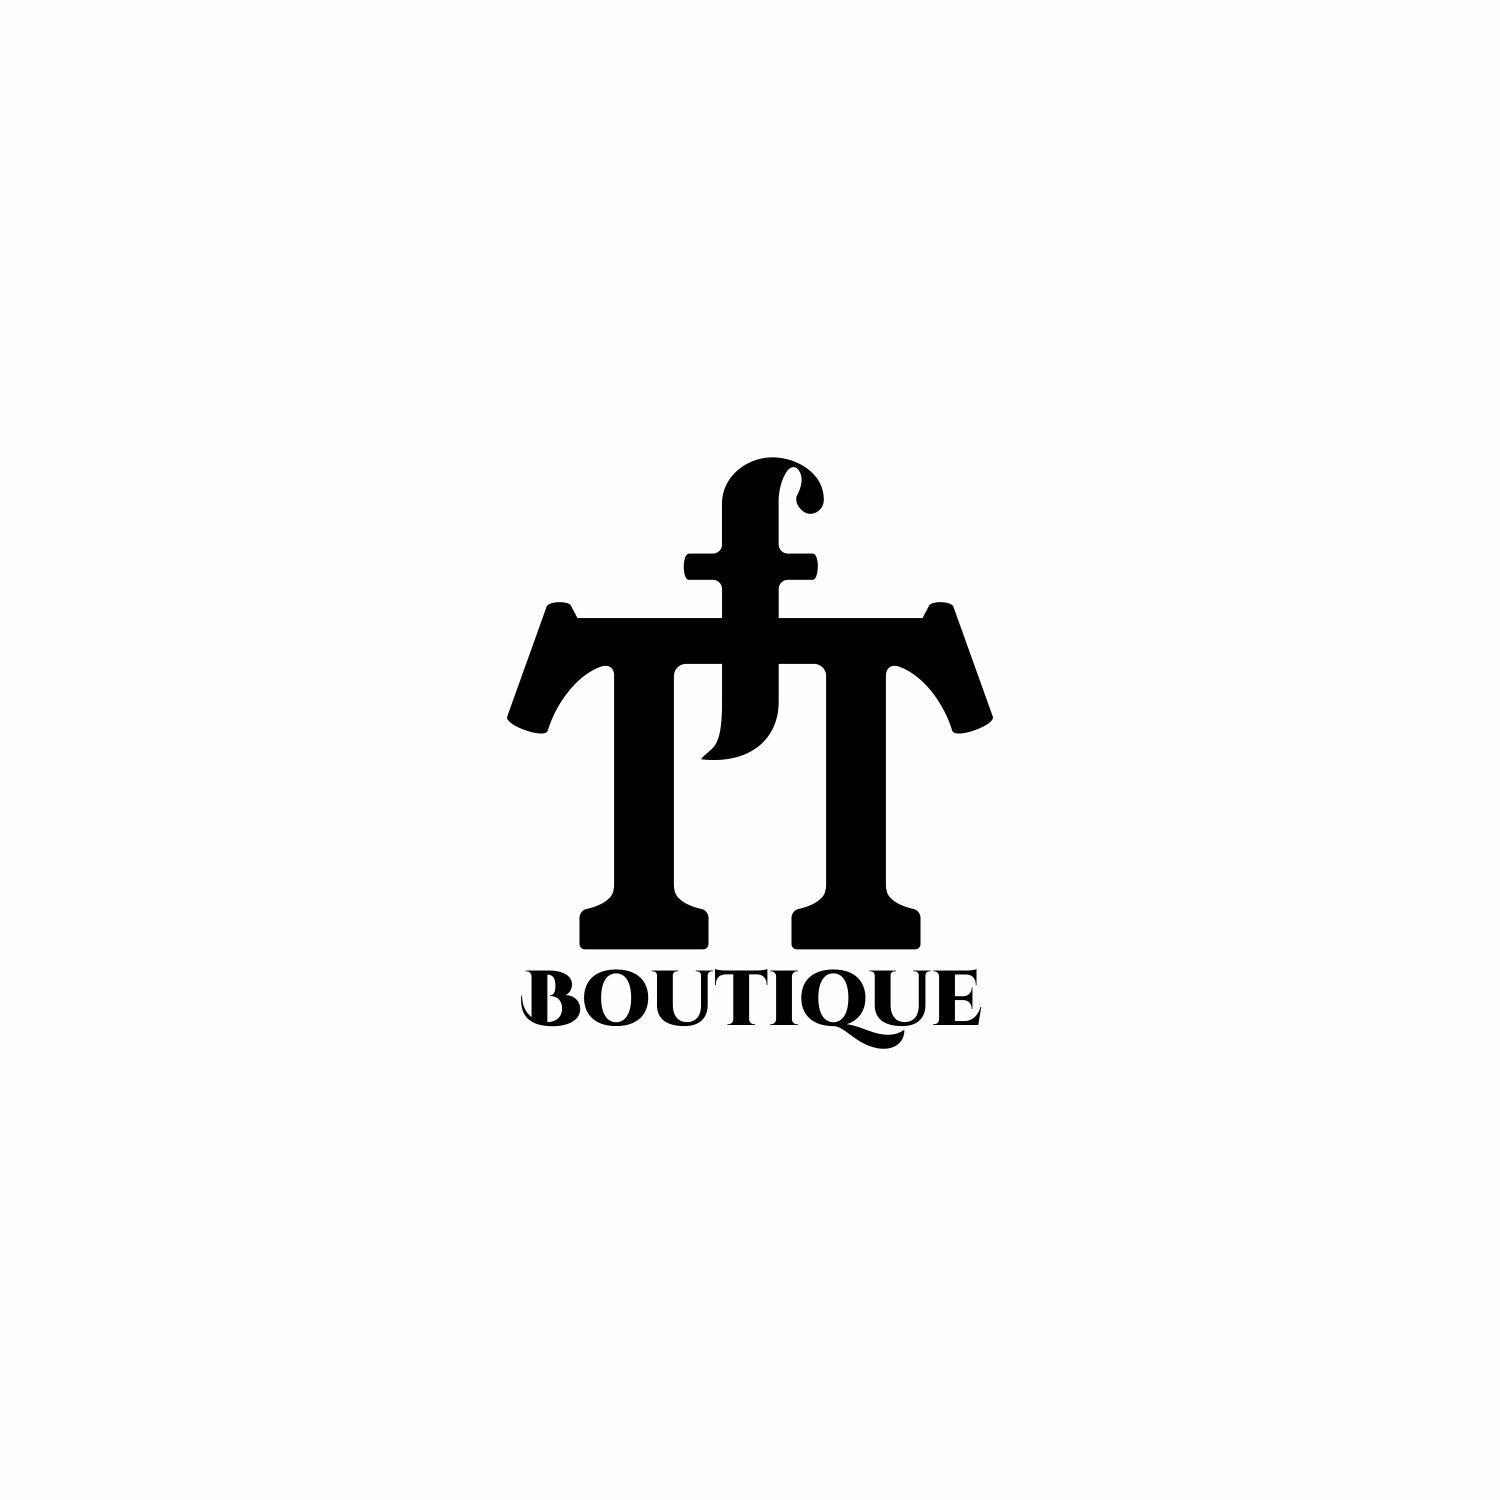 TFT Logo - Upmarket, Bold, Retail Logo Design for TFT Boutique by Daniel ...